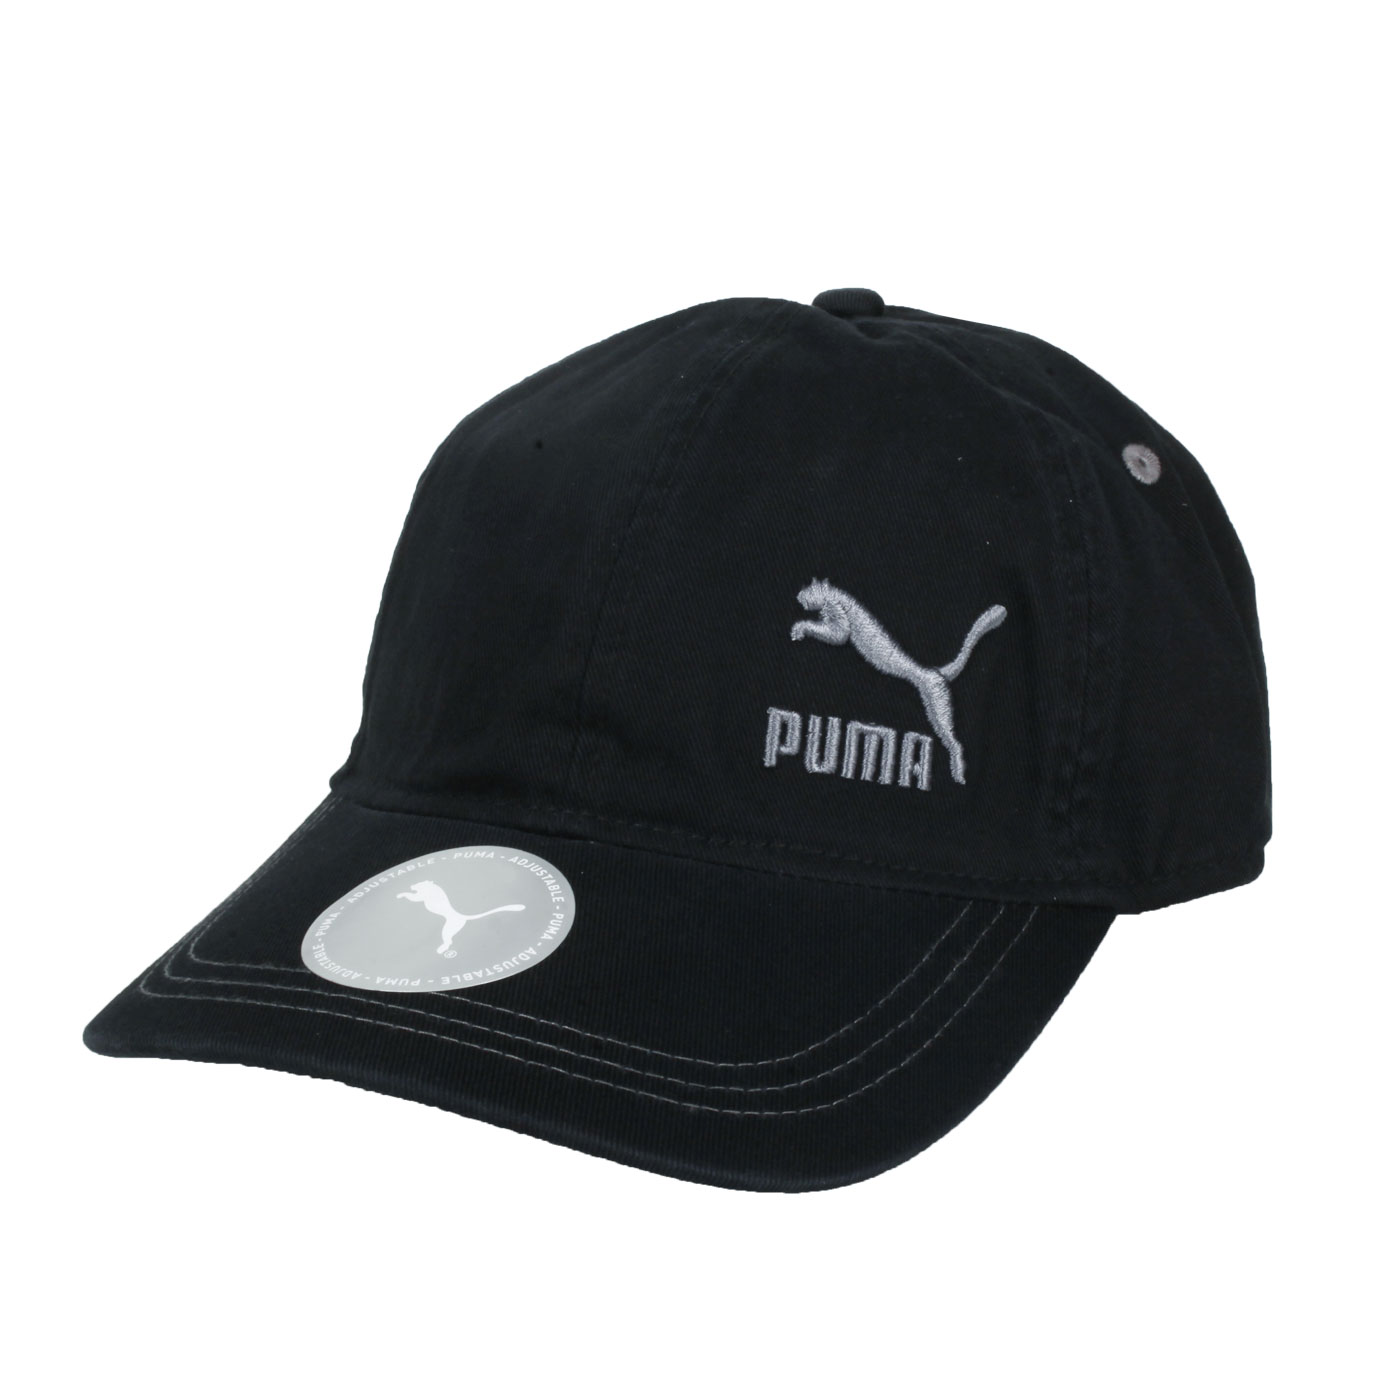 PUMA 流行系列棒球帽 02313701 - 黑灰